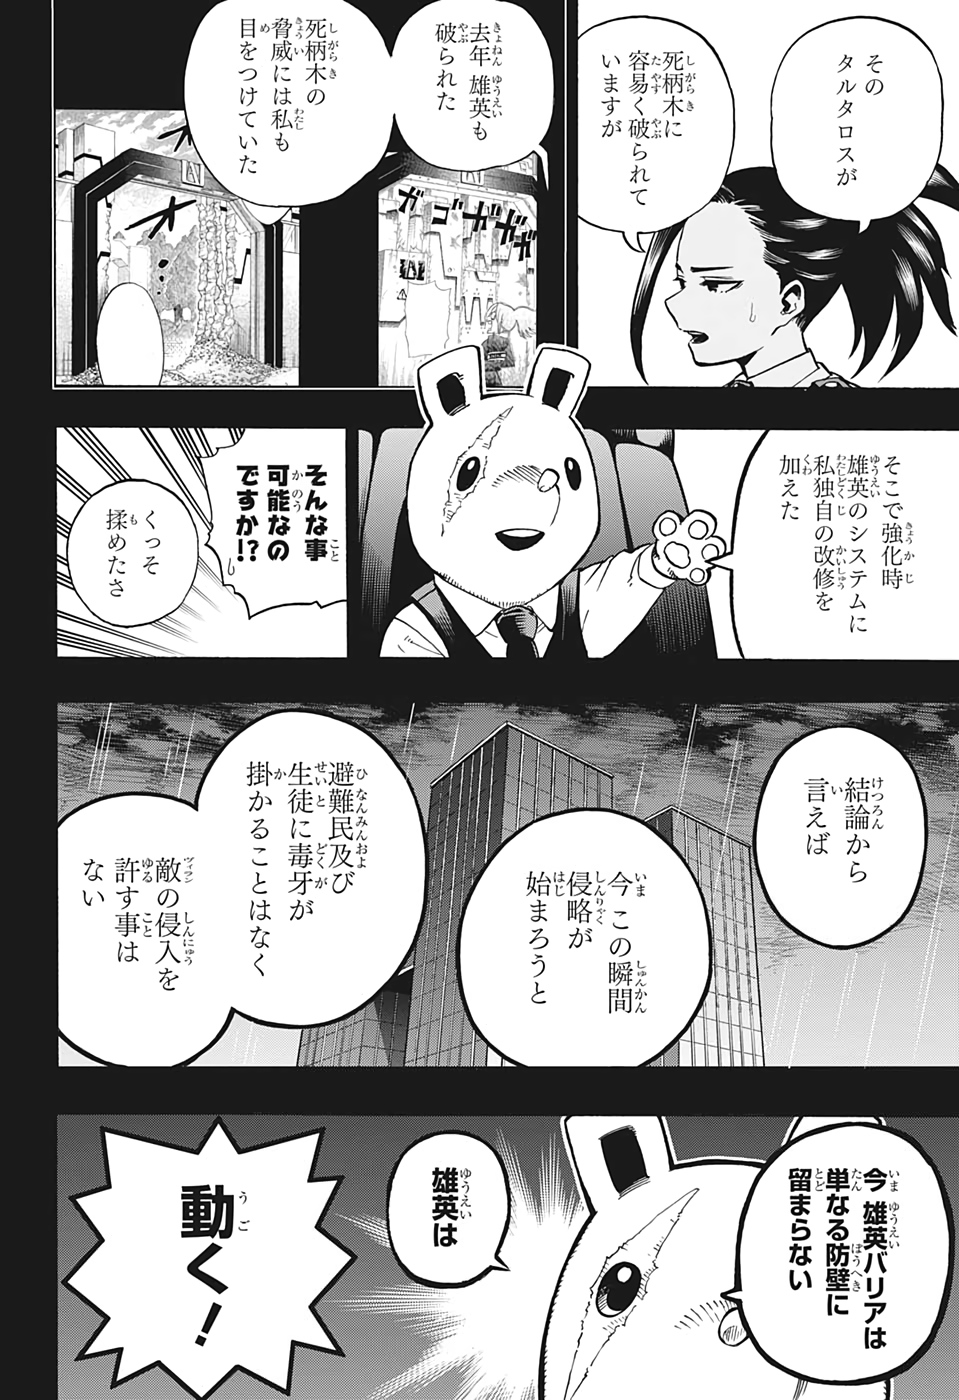 Boku no Hero Academia - Chapter 323 - Page 2